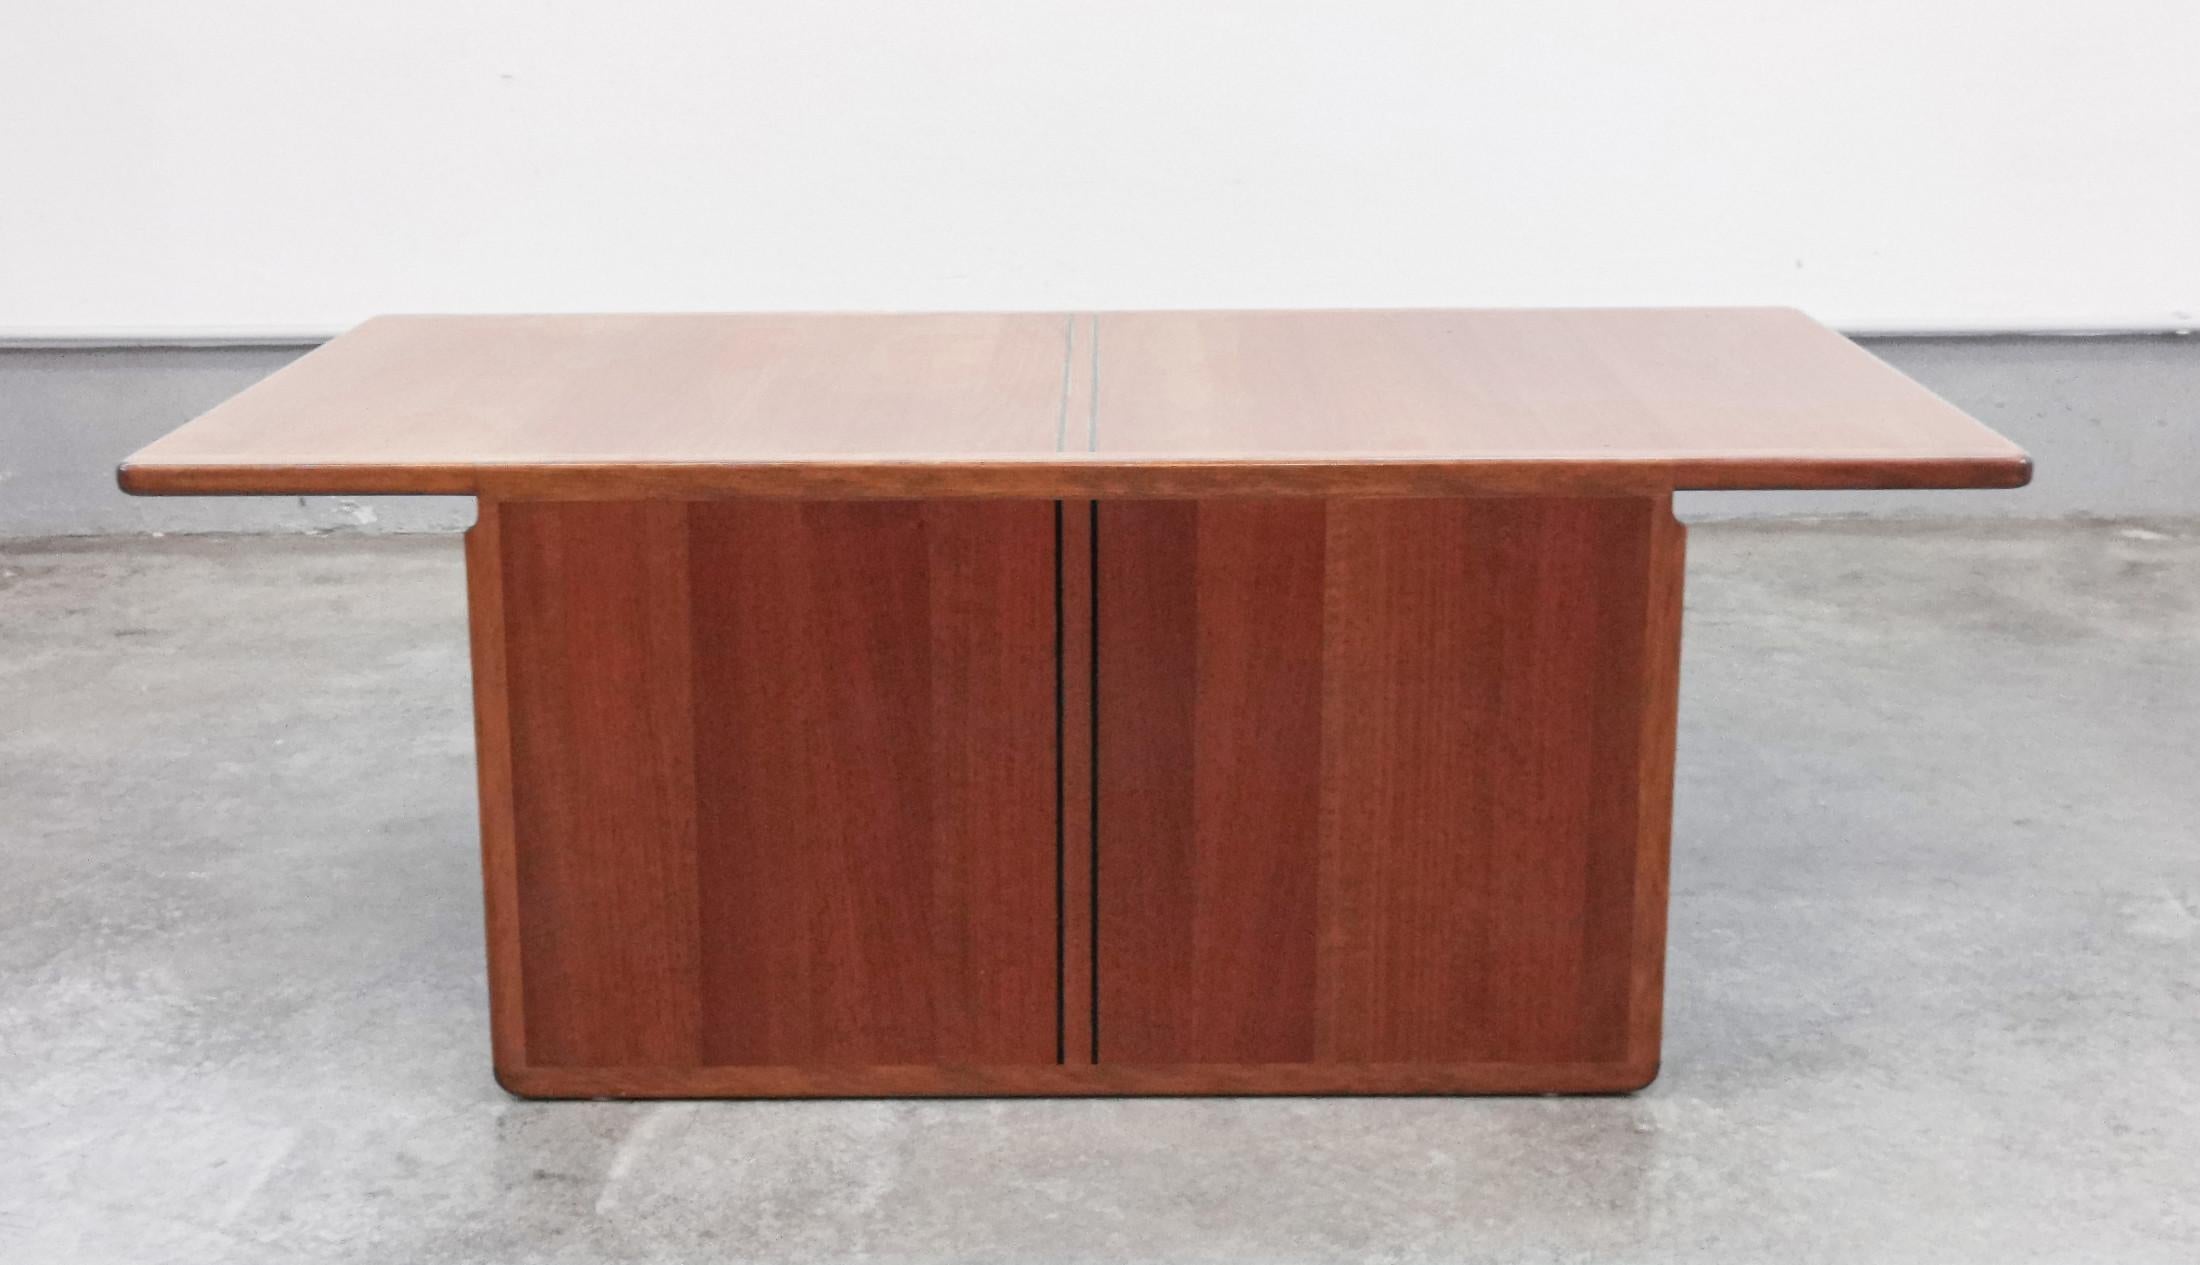 Wood Coffee Table, Artona Series, Design Afra & Tobia Scarpa for Maxalto. Italy, 1975 For Sale